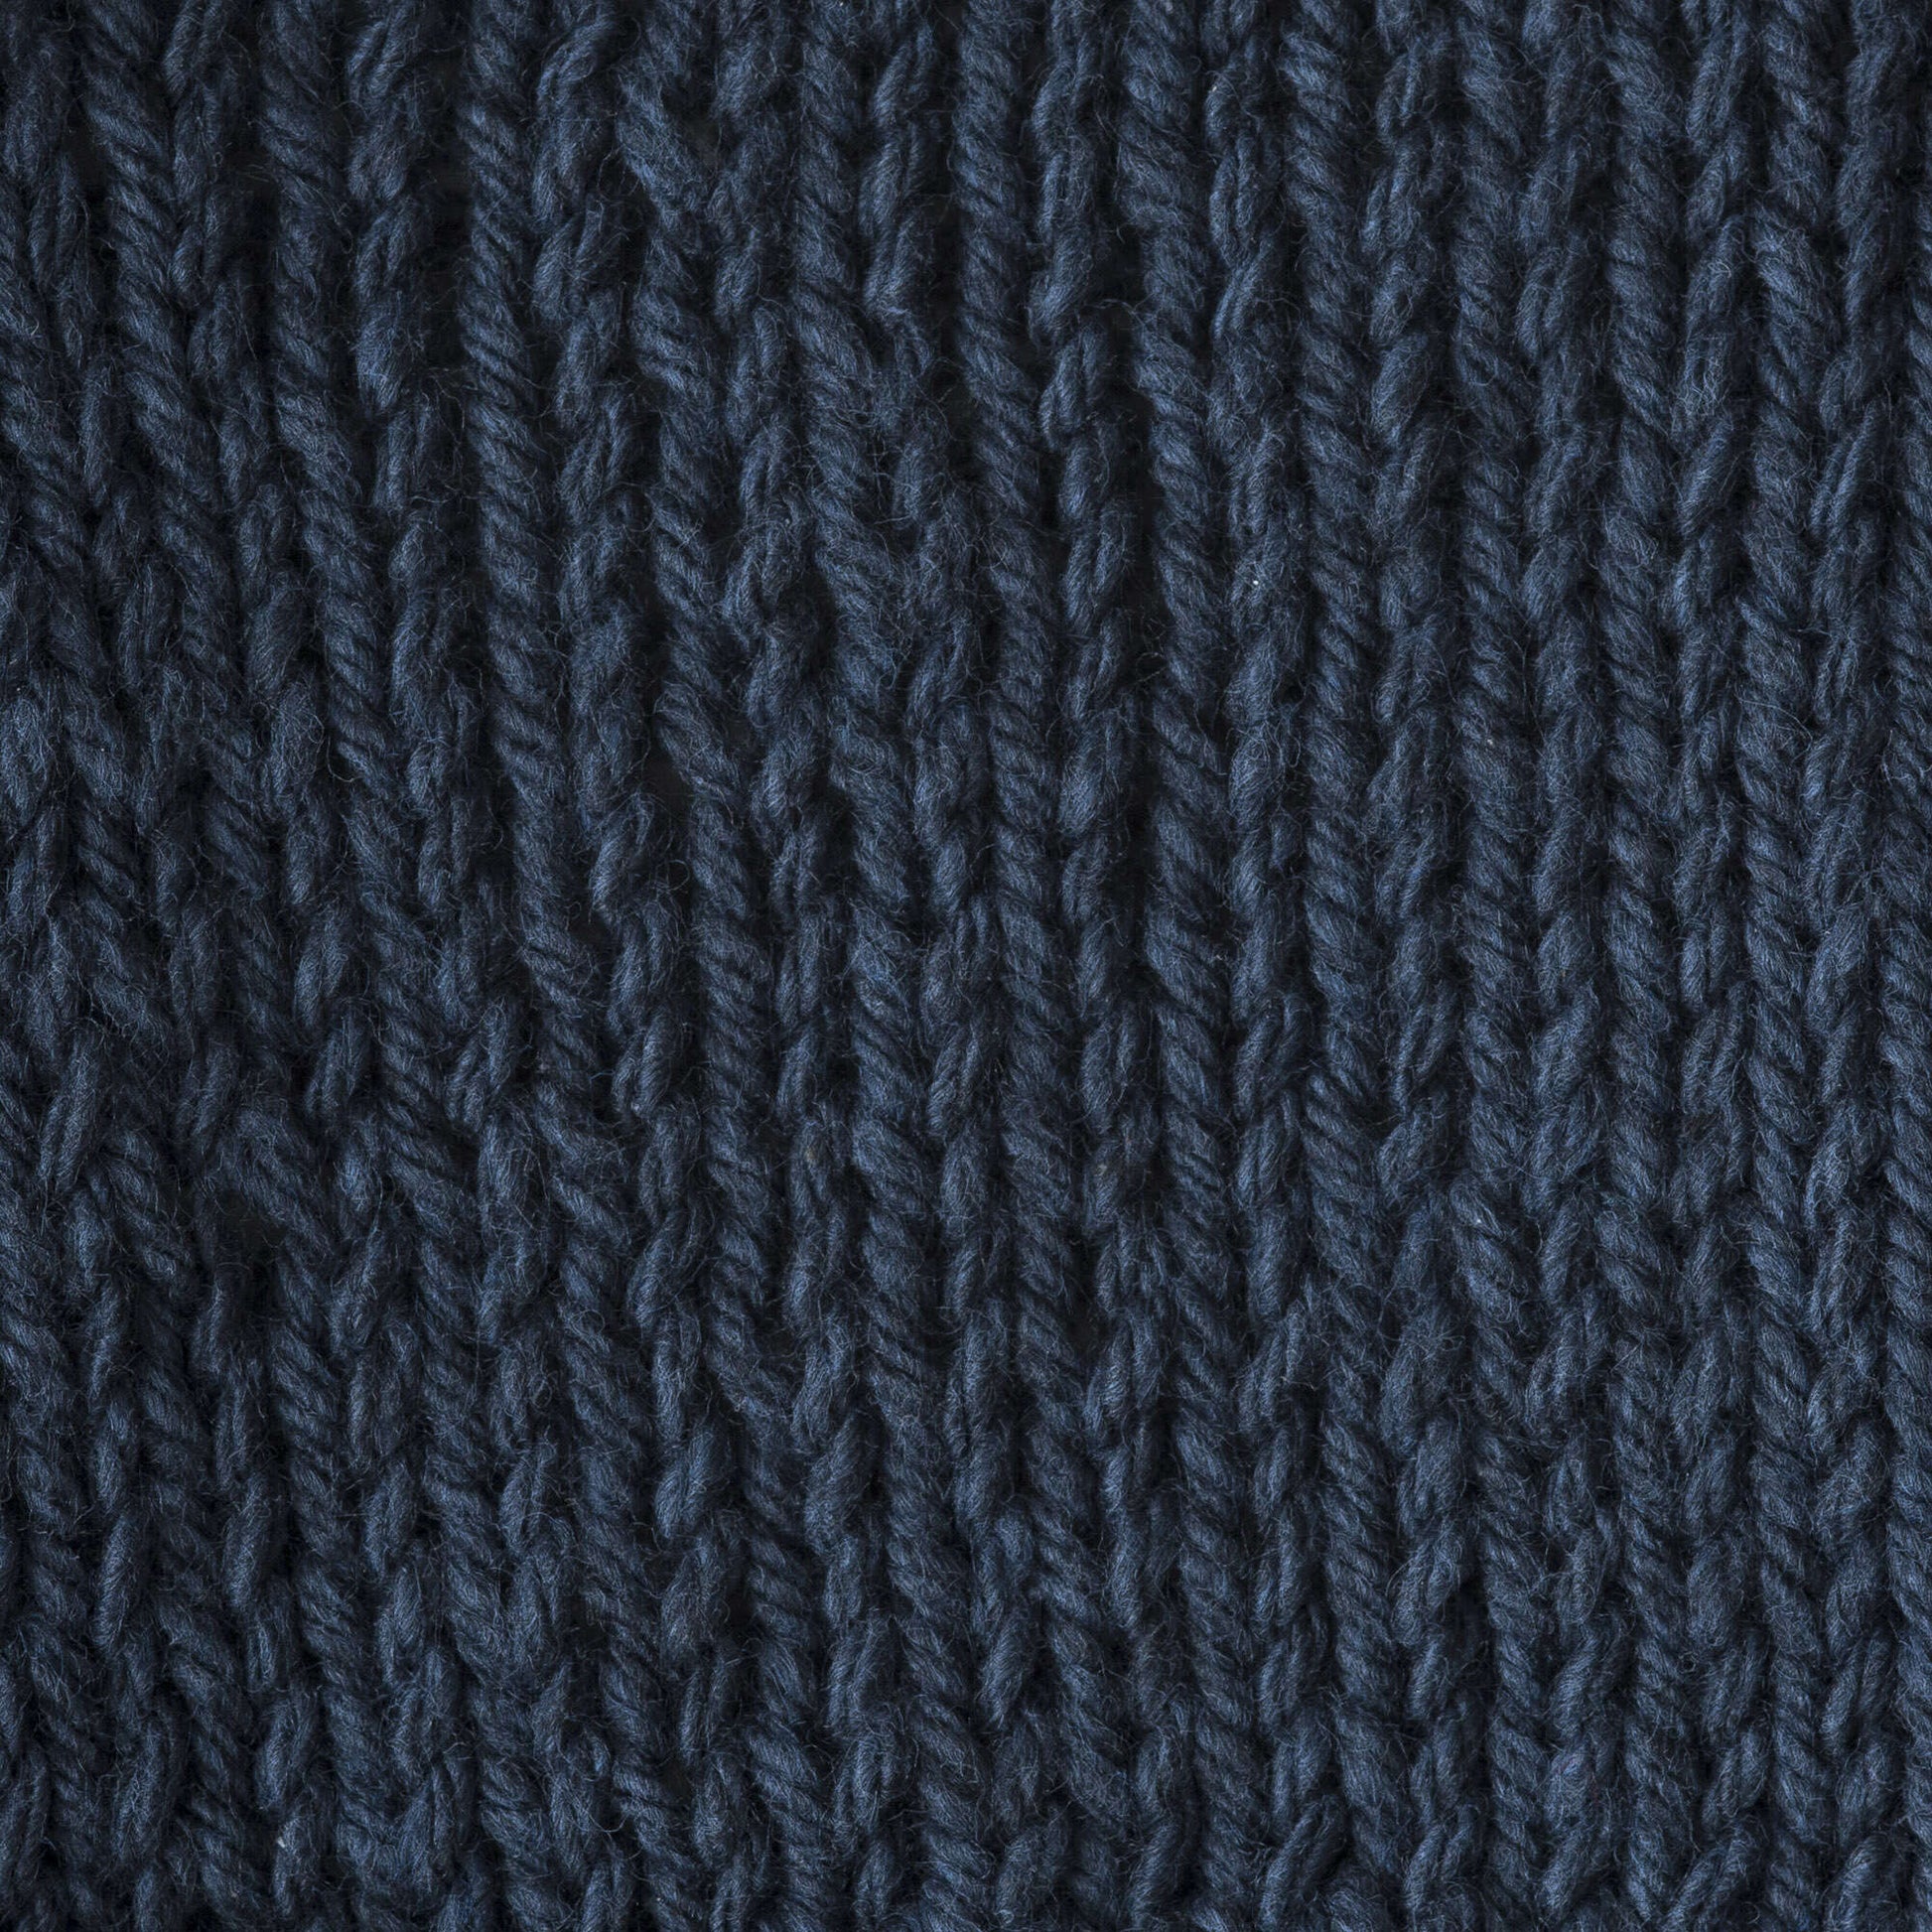 Lily Sugar'N Cream Sage Green Yarn - 6 Pack of 71g/2.5oz - Cotton - 4  Medium (Worsted) - 120 Yards - Knitting/Crochet